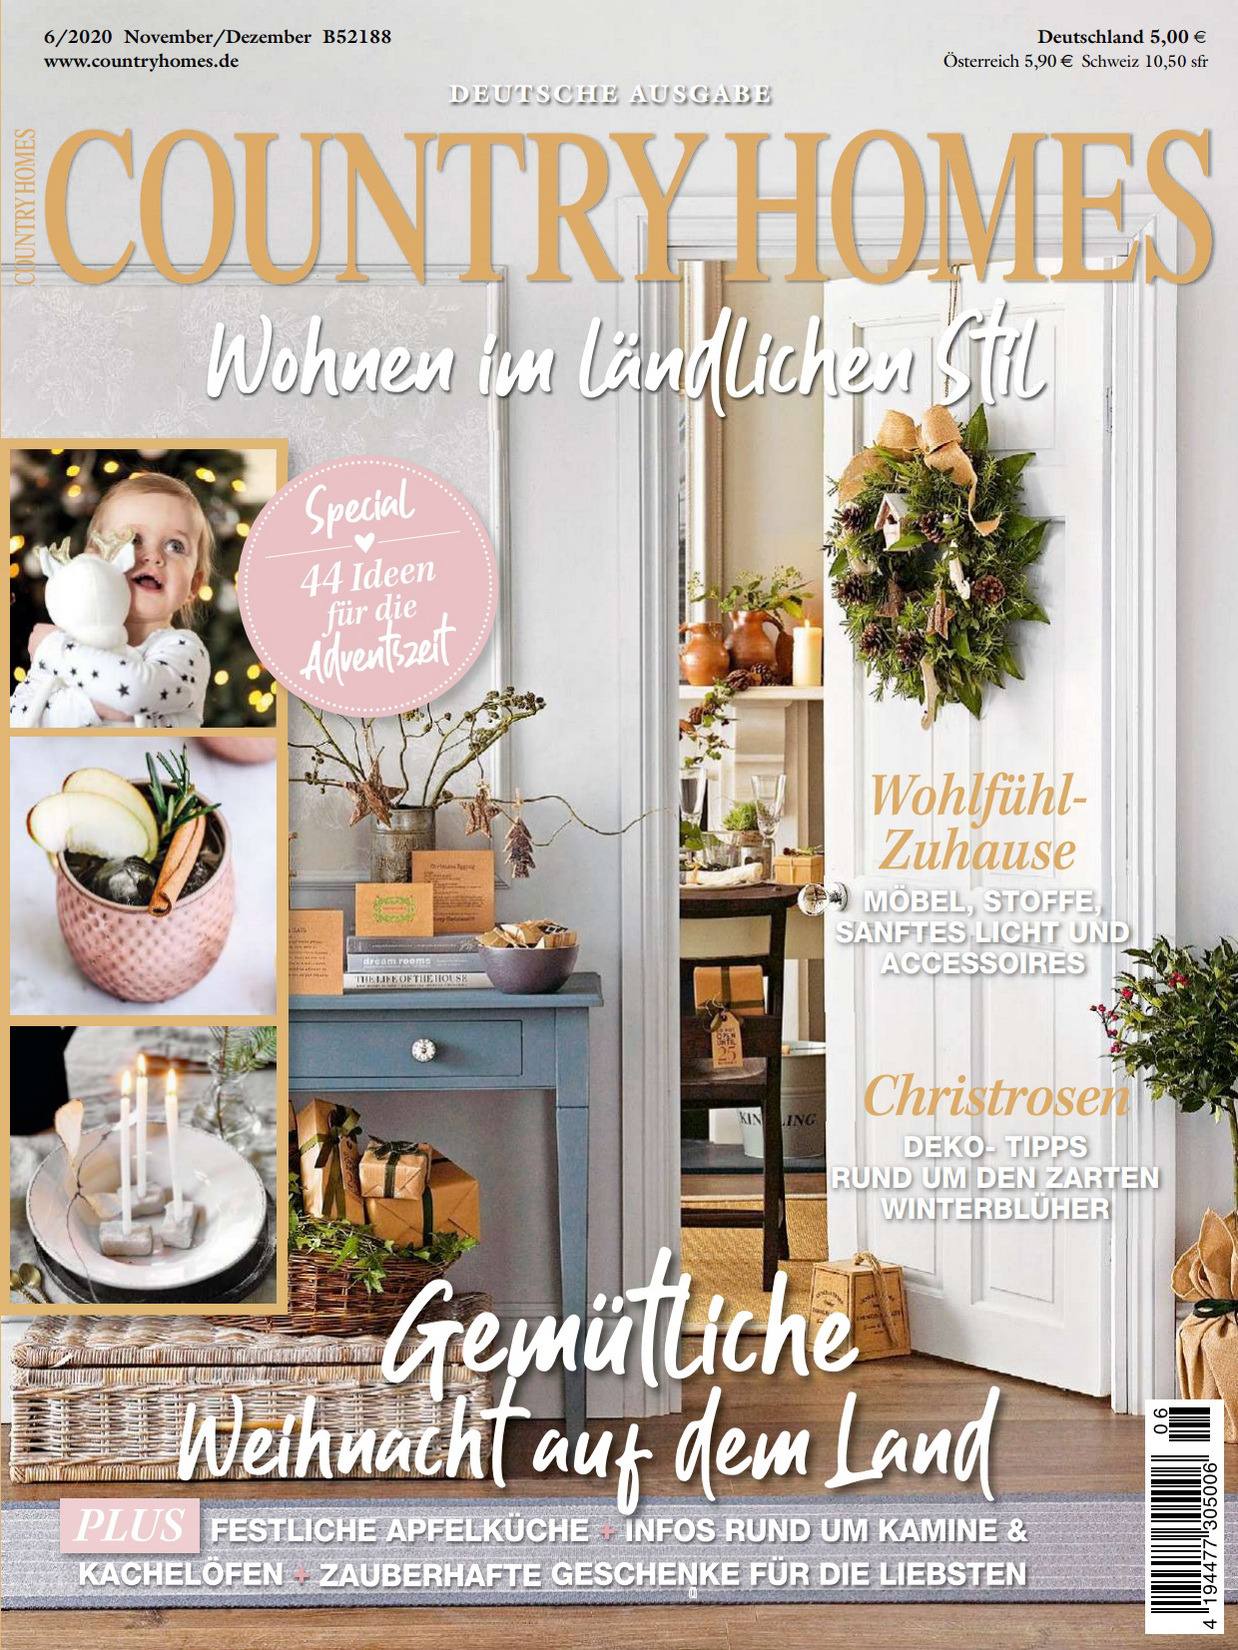 《Country Homes》德国版时尚家居杂志2020年11-12月号